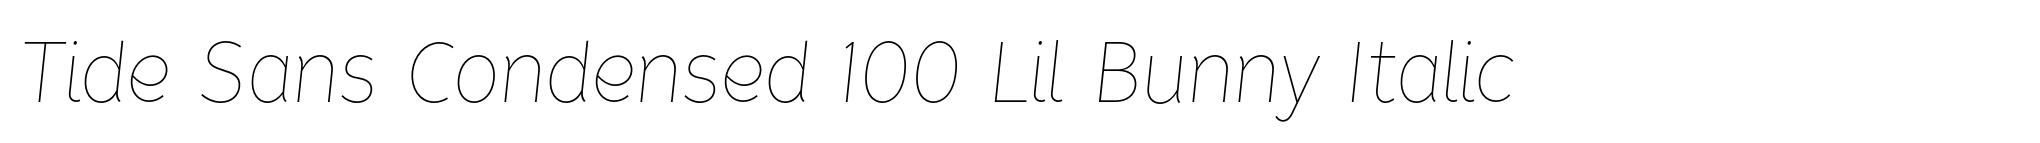 Tide Sans Condensed 100 Lil Bunny Italic image